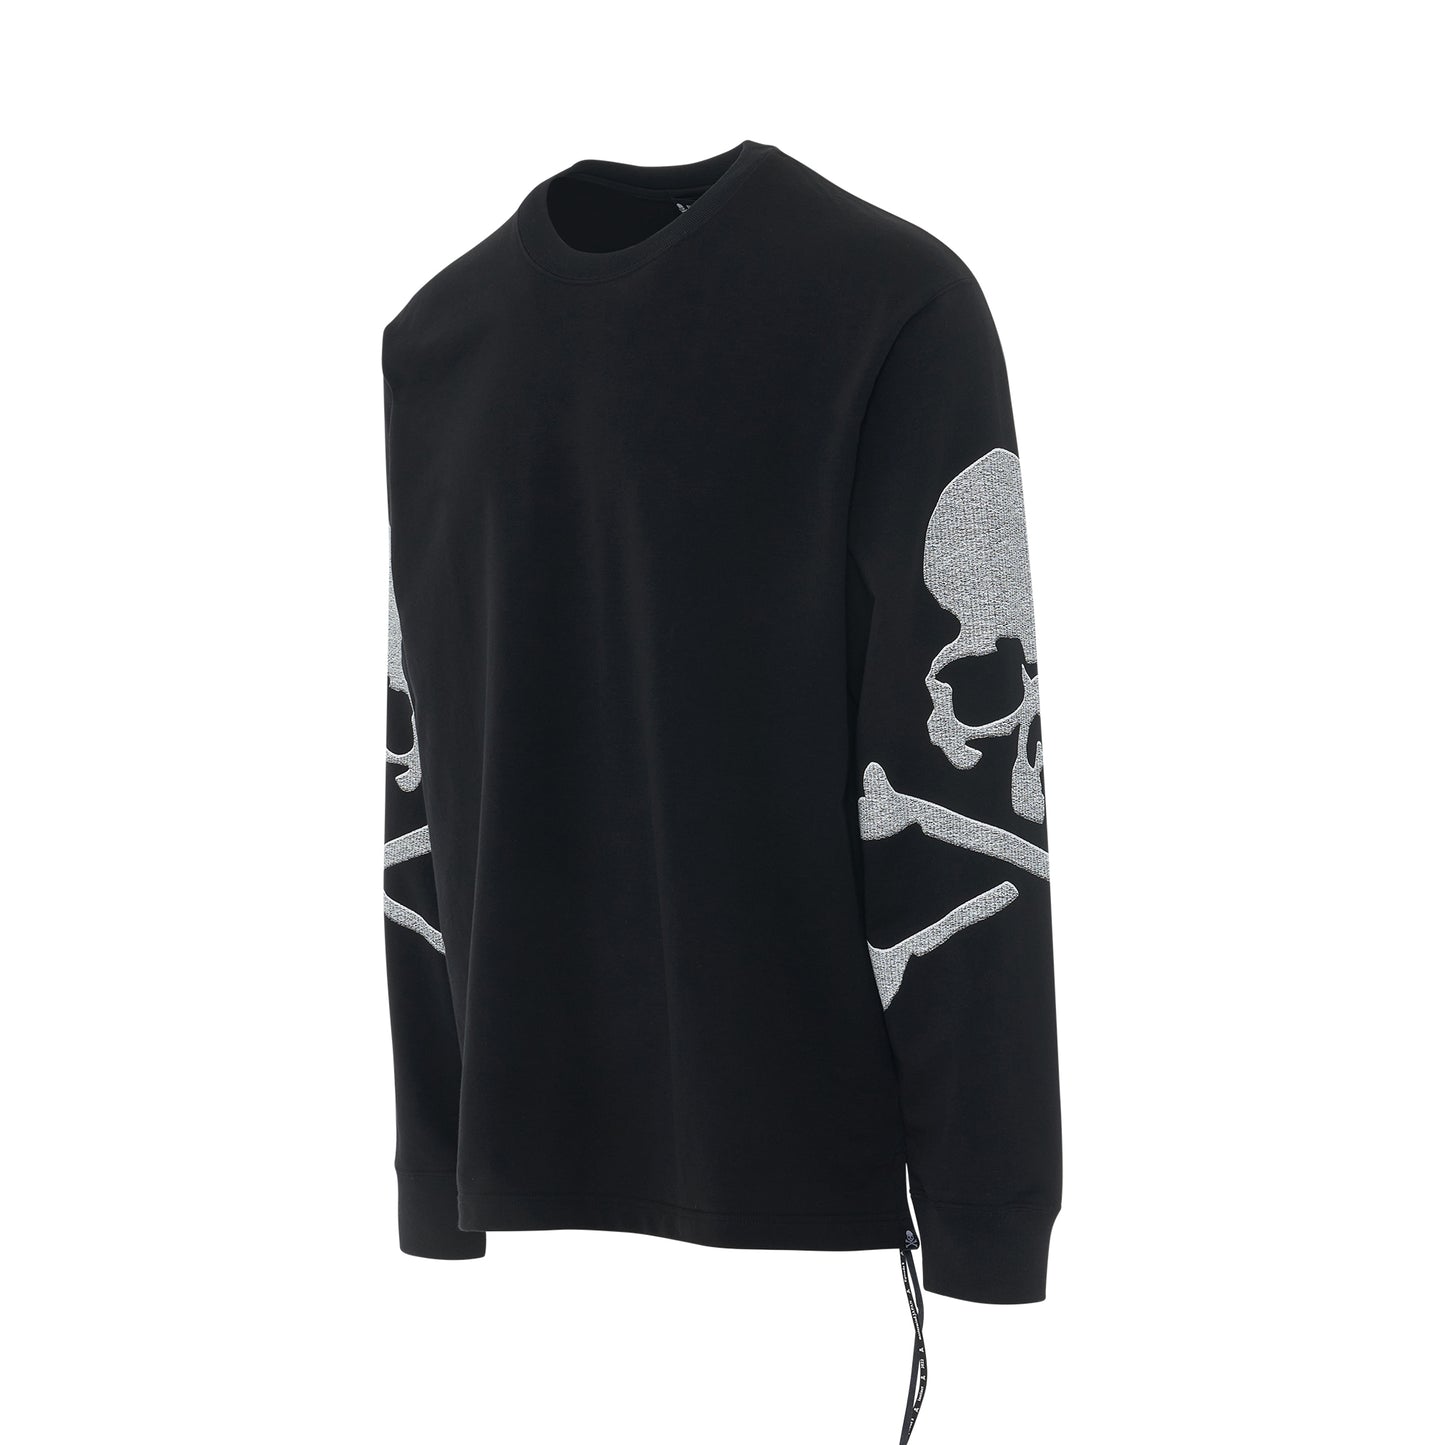 Embroidered Skull Sweatshirt in Black